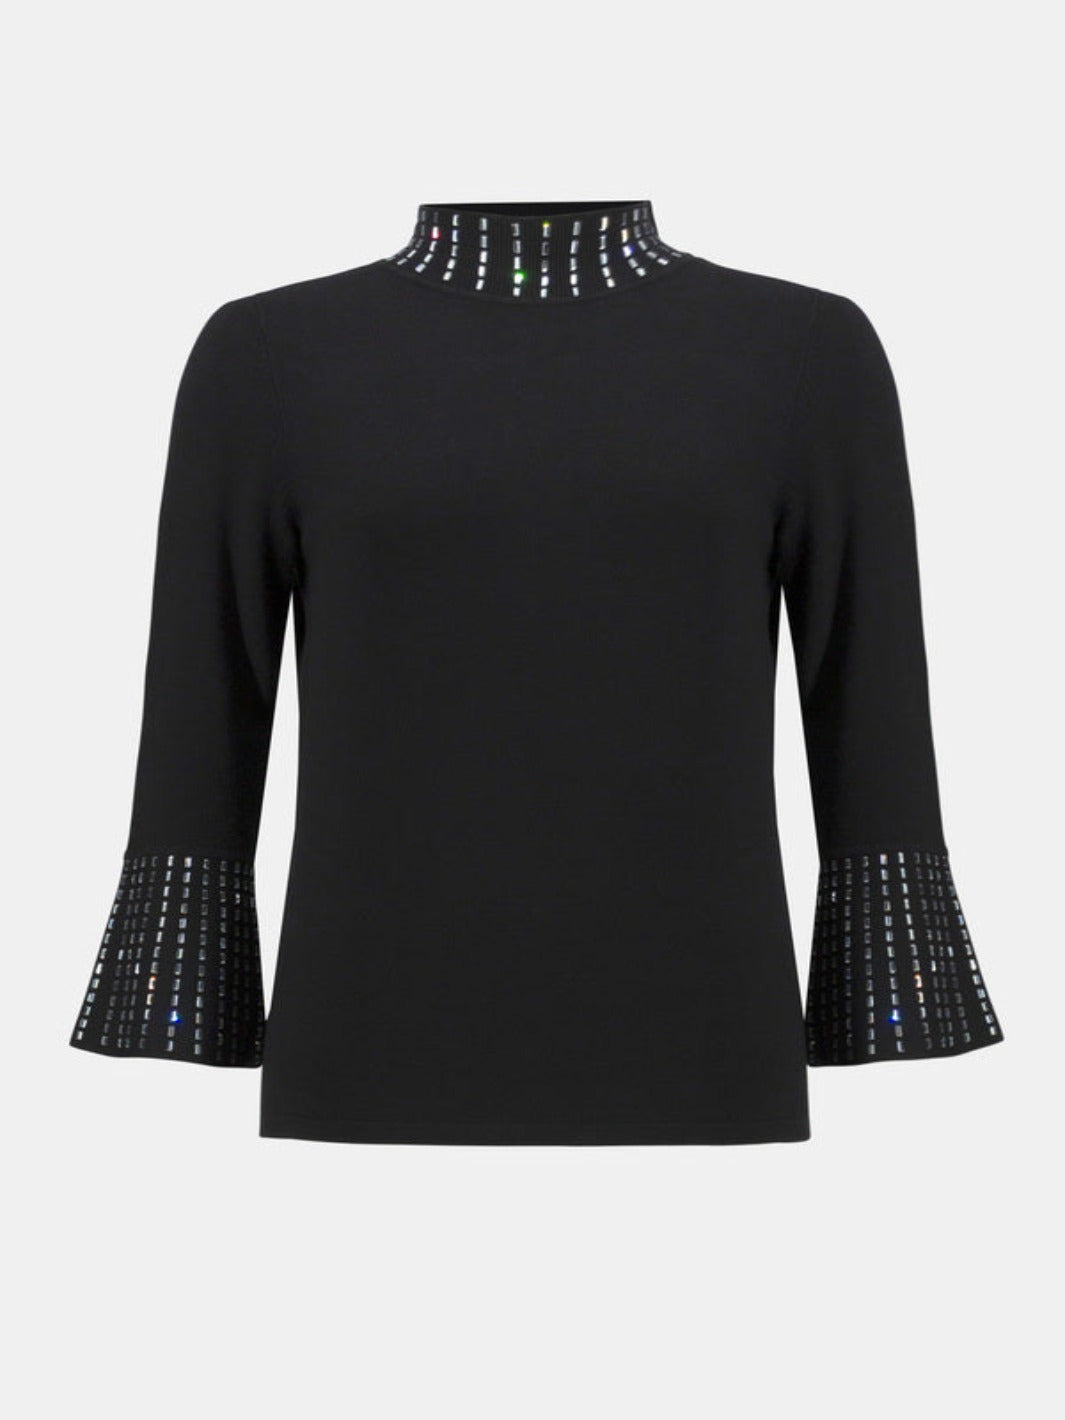 Joseph Ribkoff Beaded Detail Sweater In Black 234920-Nicola Ross